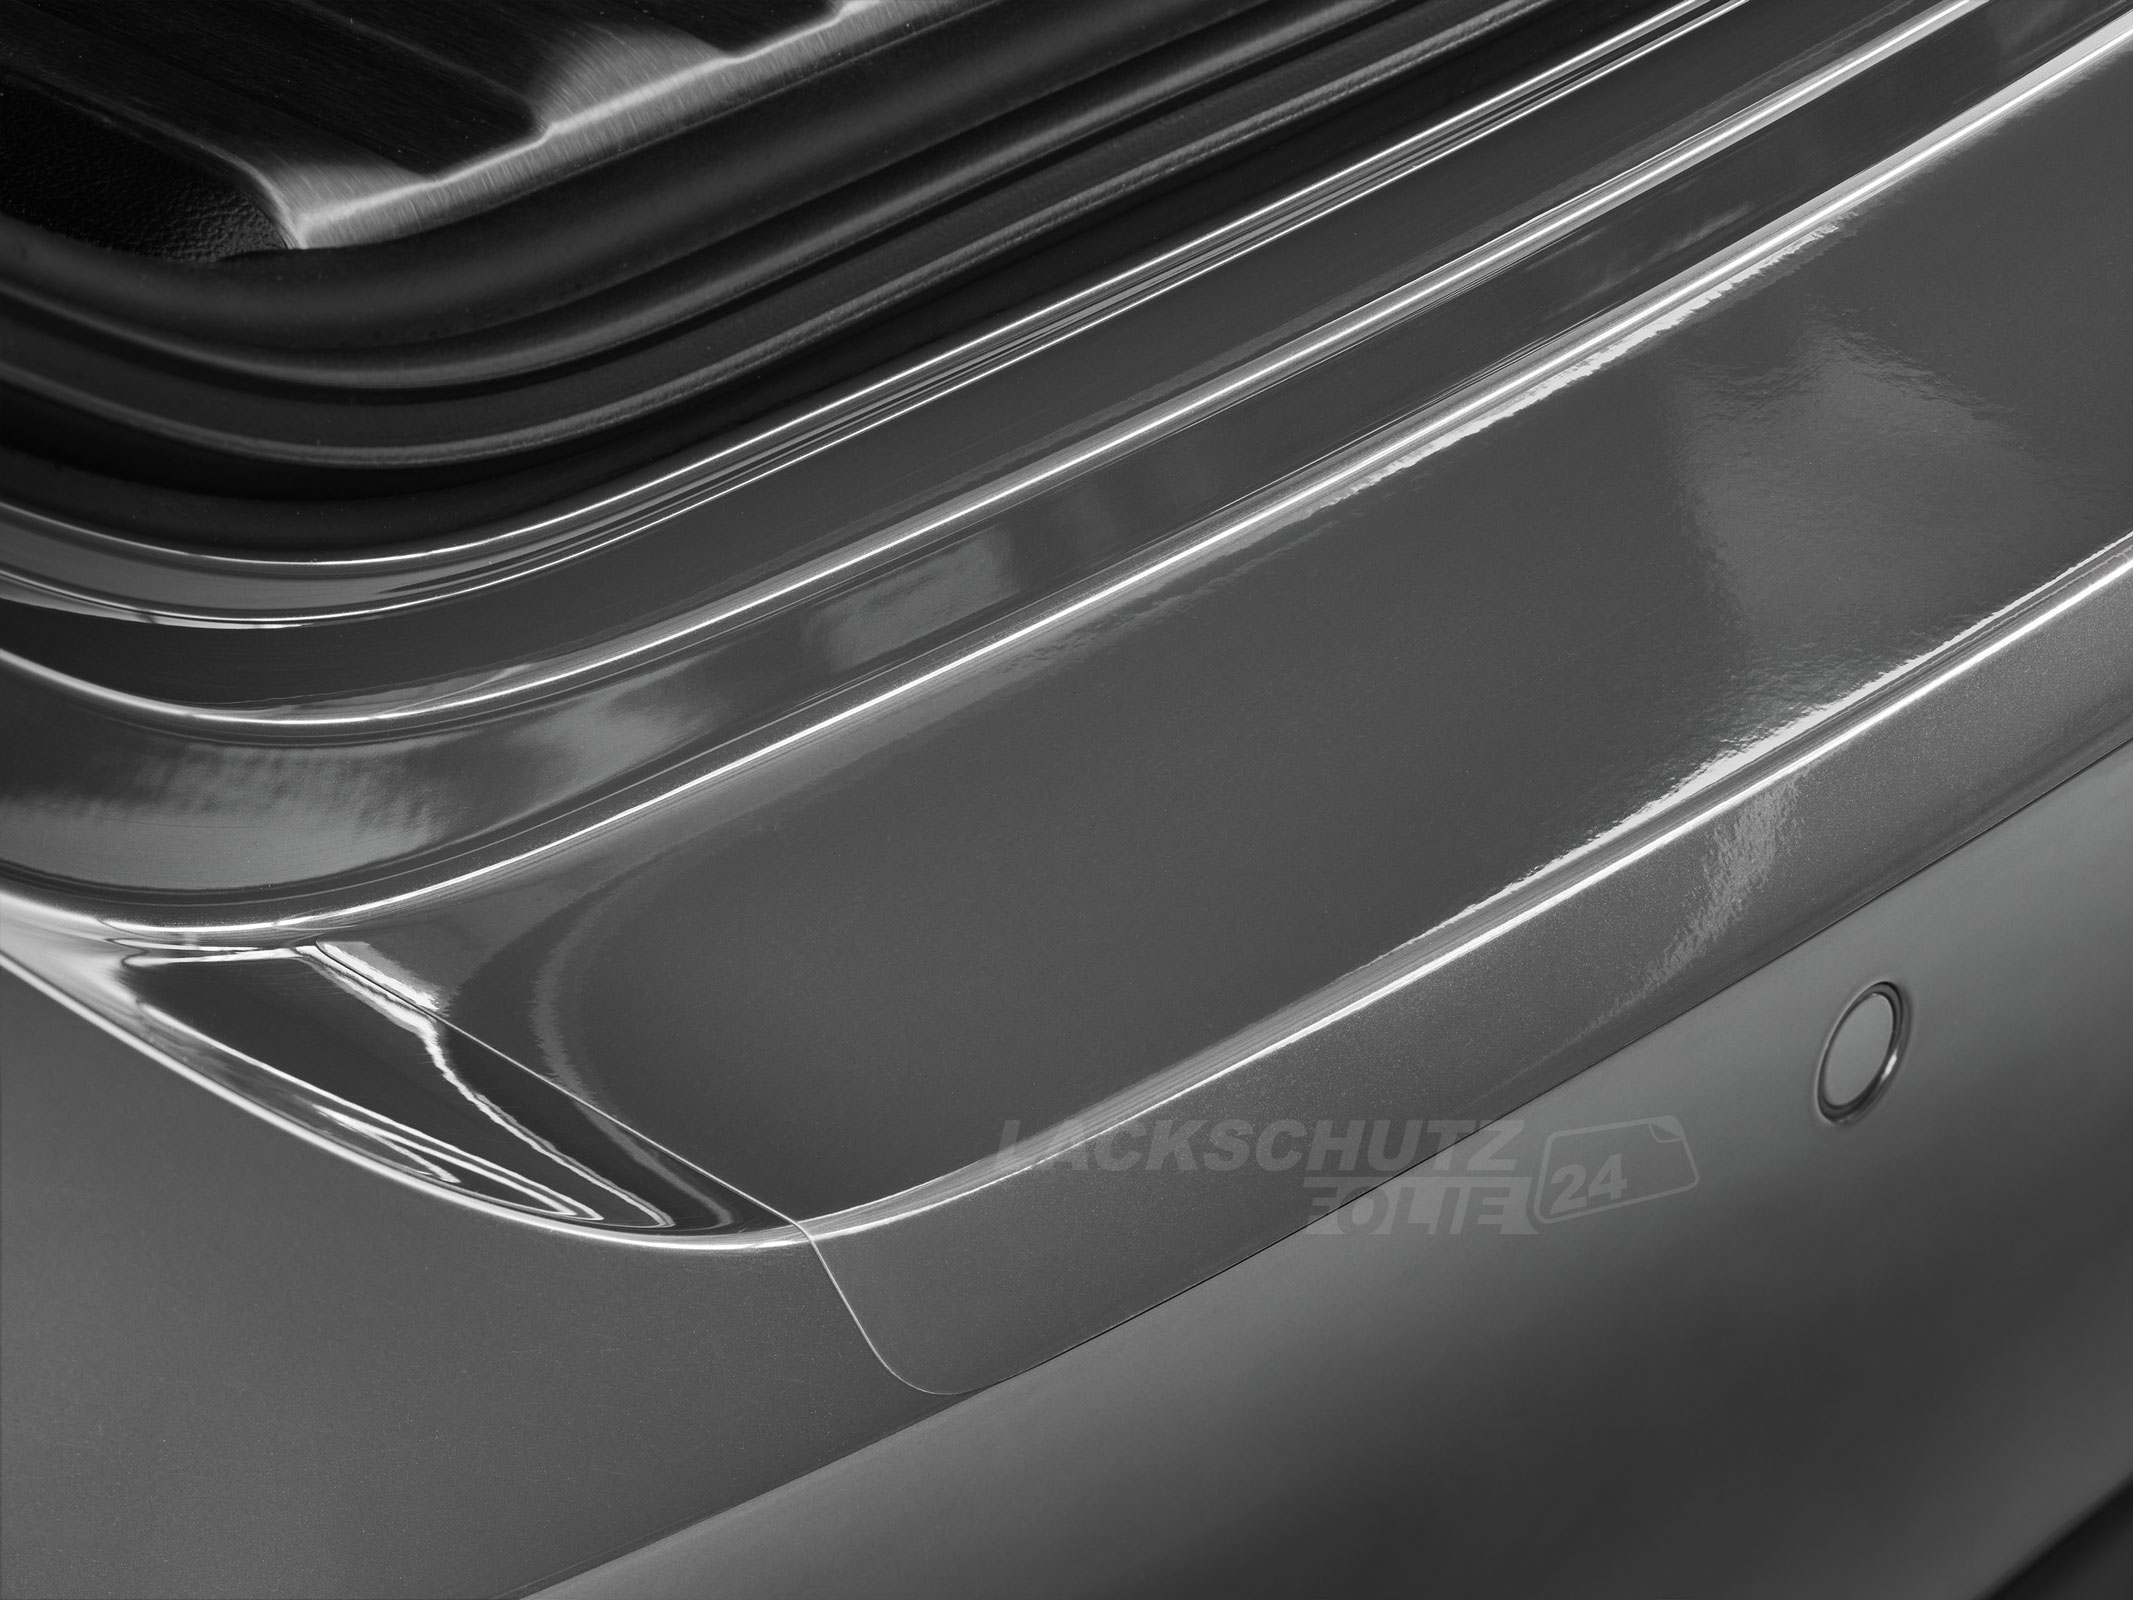 Ladekantenschutzfolie - Transparent Glatt Hochglänzend 240 µm stark für Audi A6 Limousine C8, Typ 4K, ab BJ 03/2018